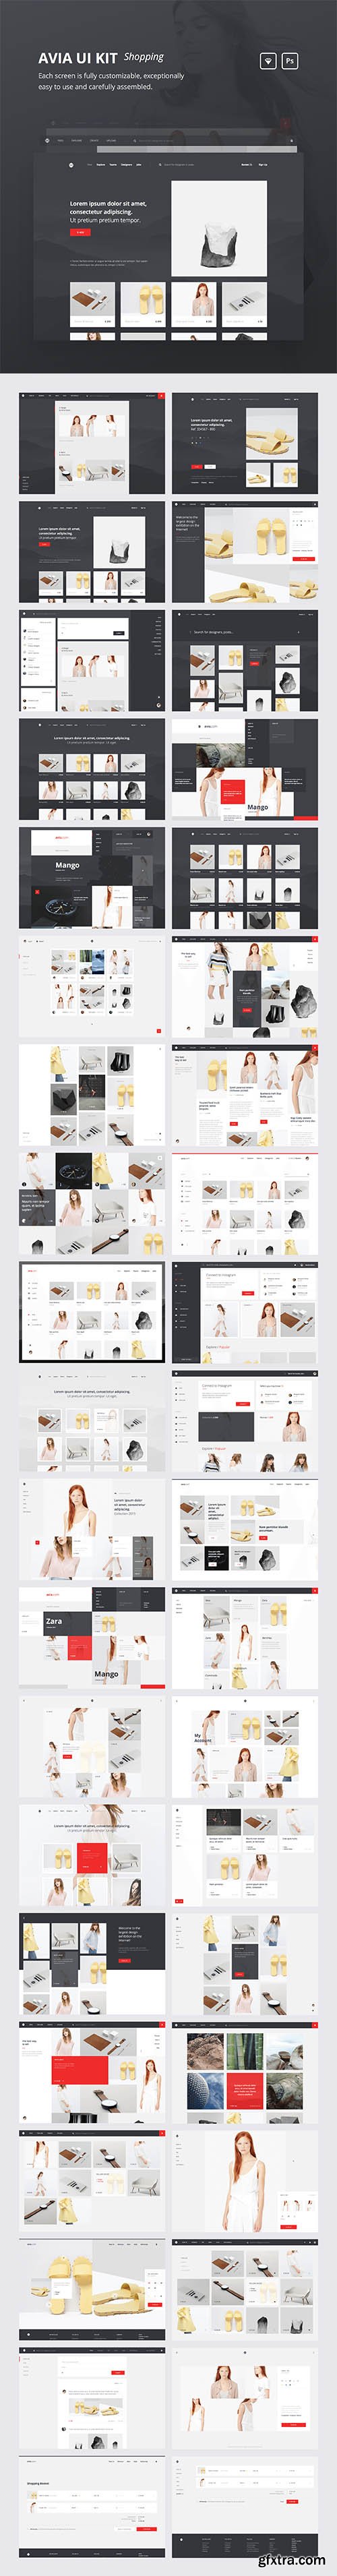 Avia UI Kit: Shopping - Highly polished 40 template UI Kit